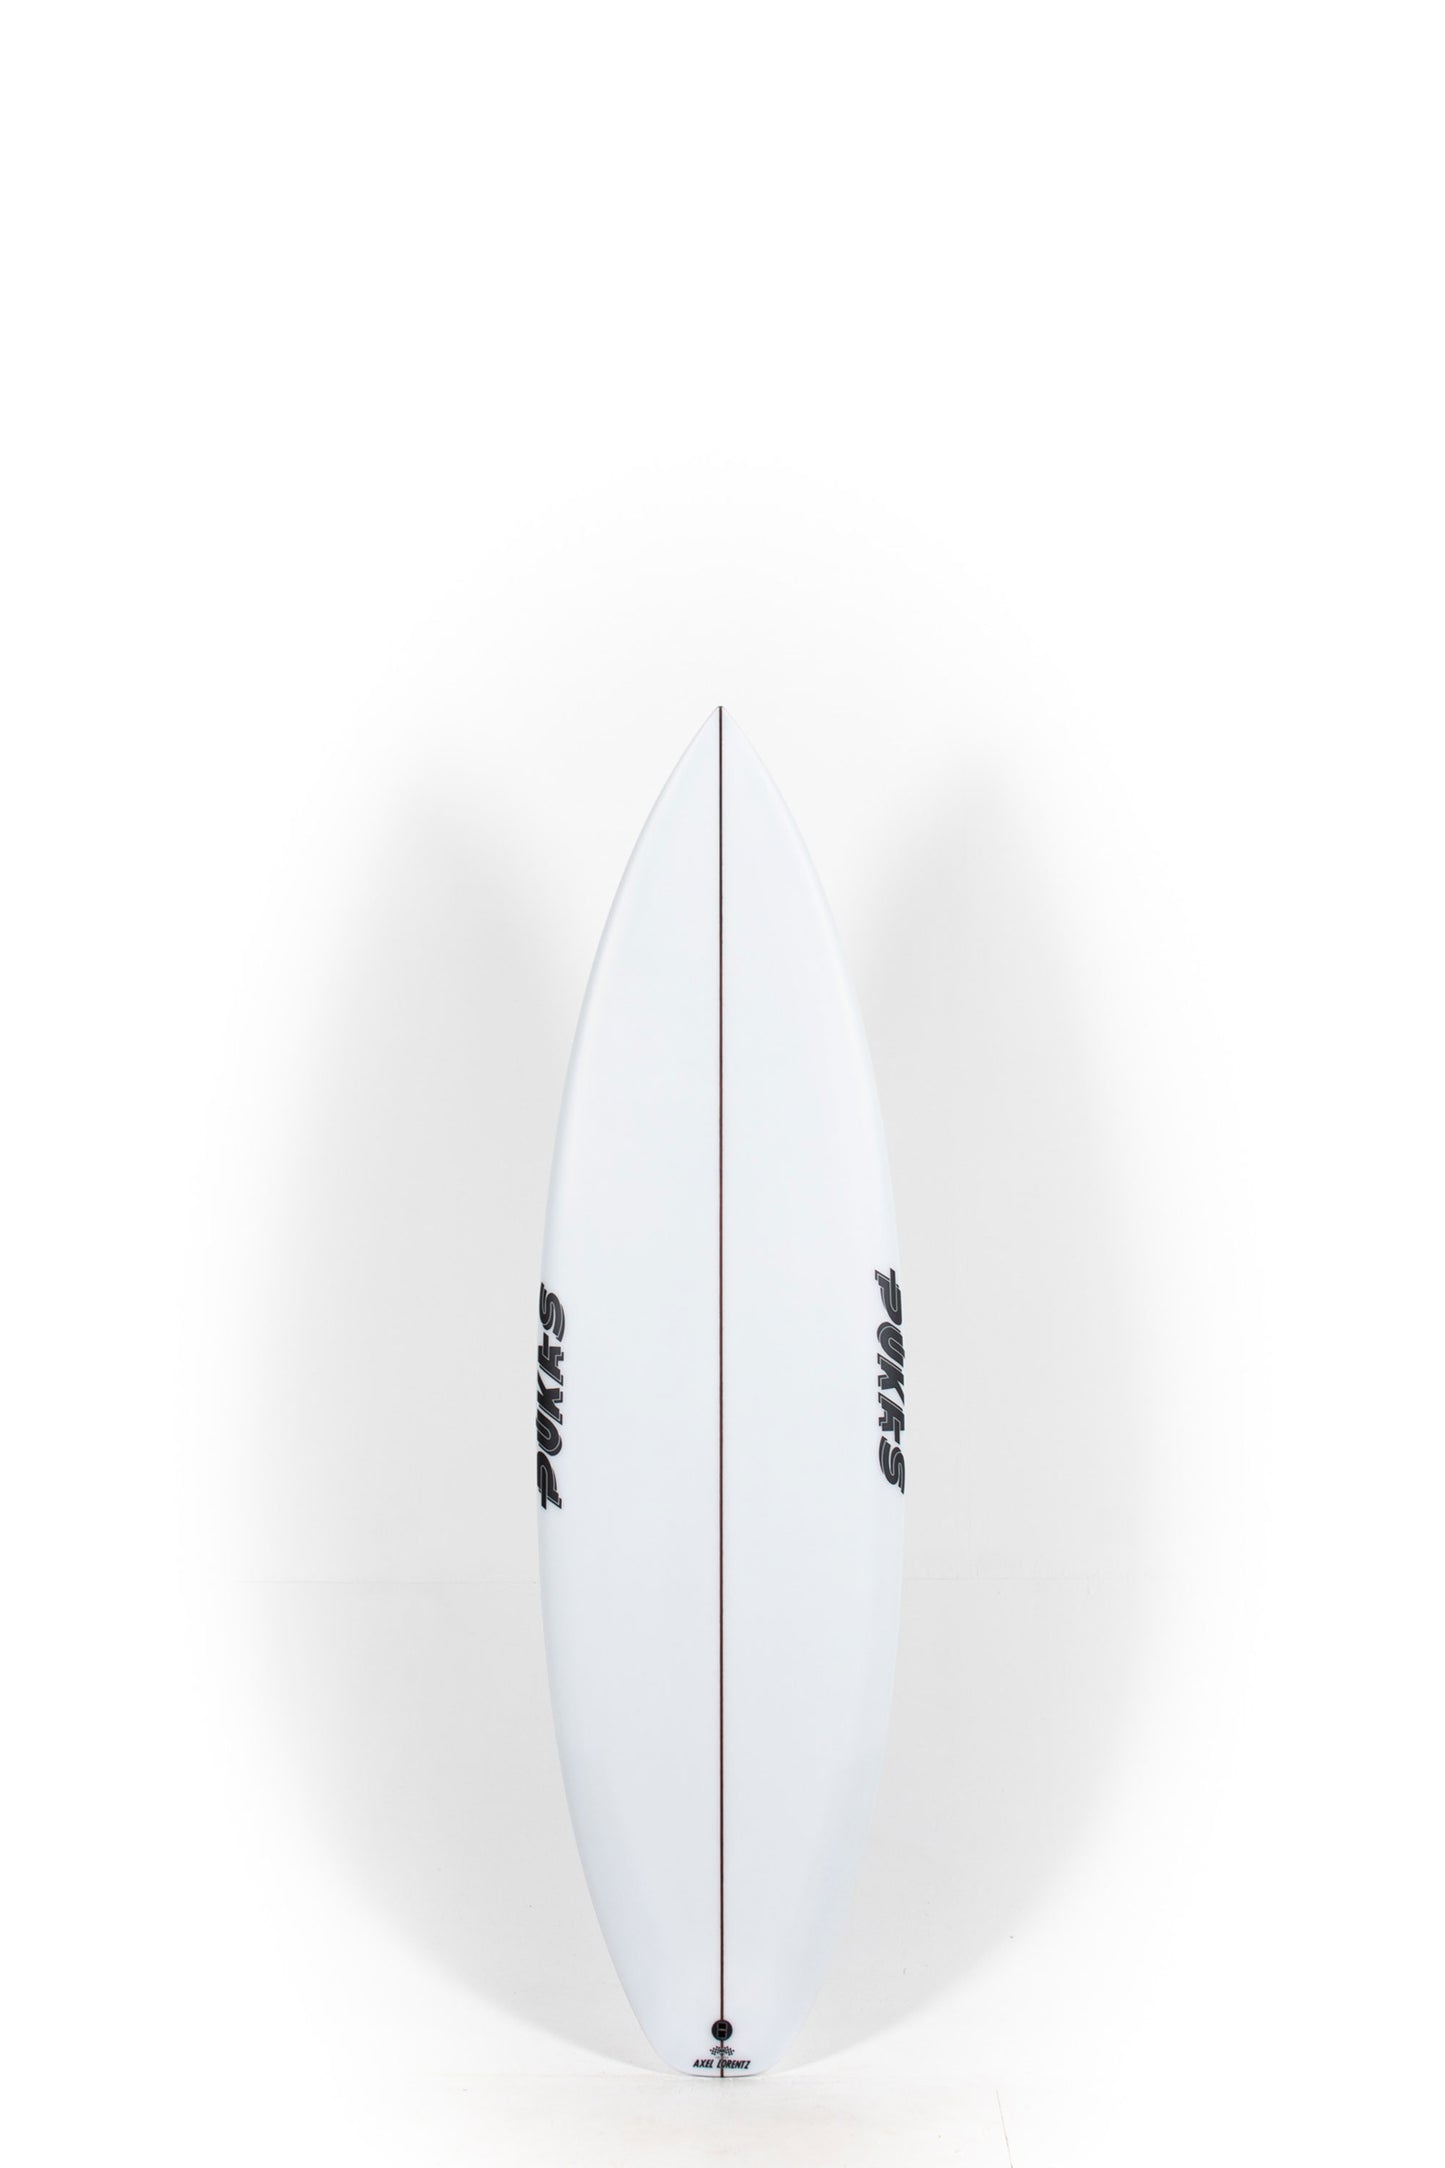 Pukas Surf Shop - Pukas Surfboard - DARKER by Axel Lorentz - 5'10" x 19,25 x 2,31 x 27,76L. - AX08563